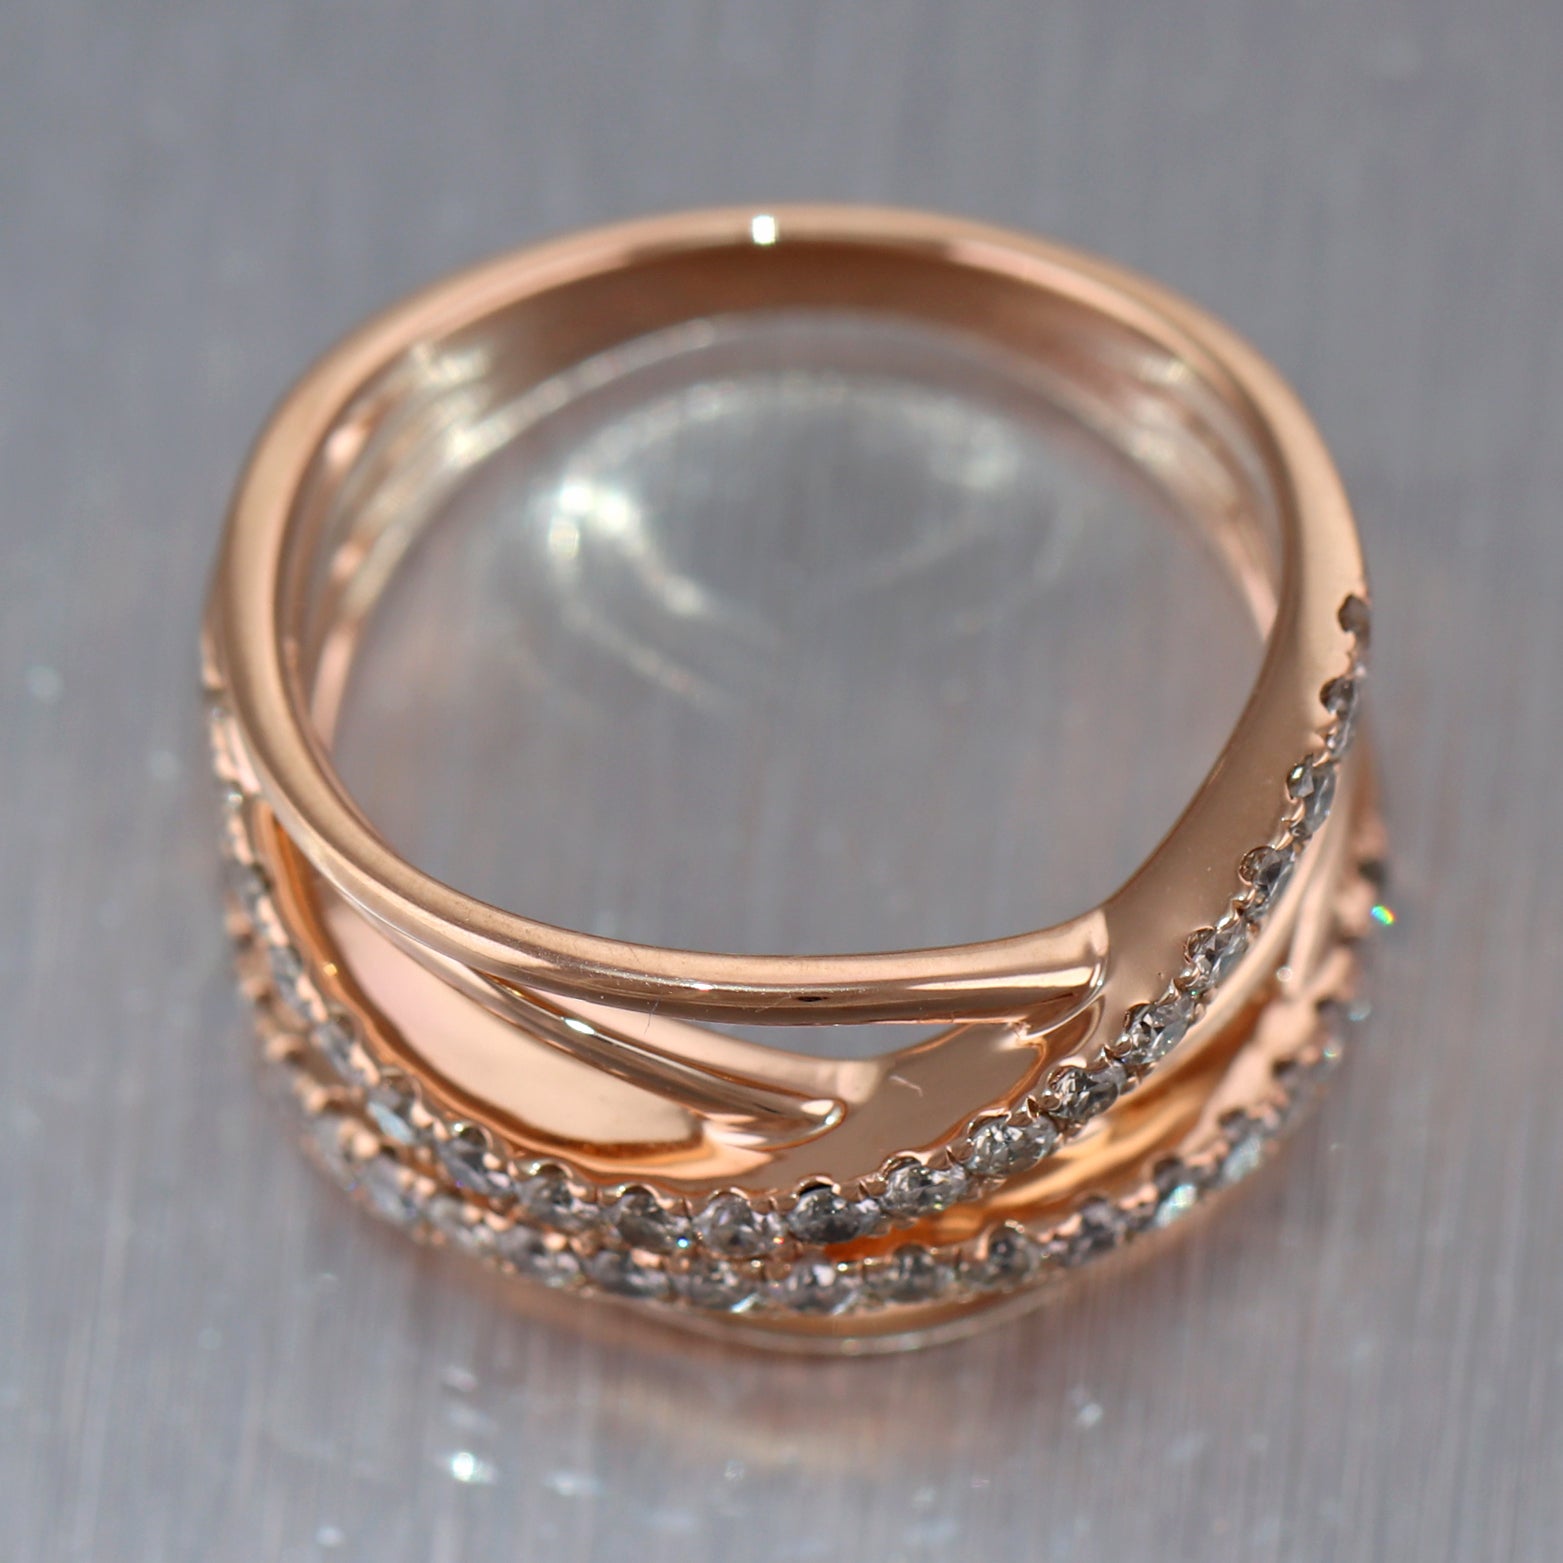 LeVian 14k Rose Gold 1ctw Diamond Wave Ring